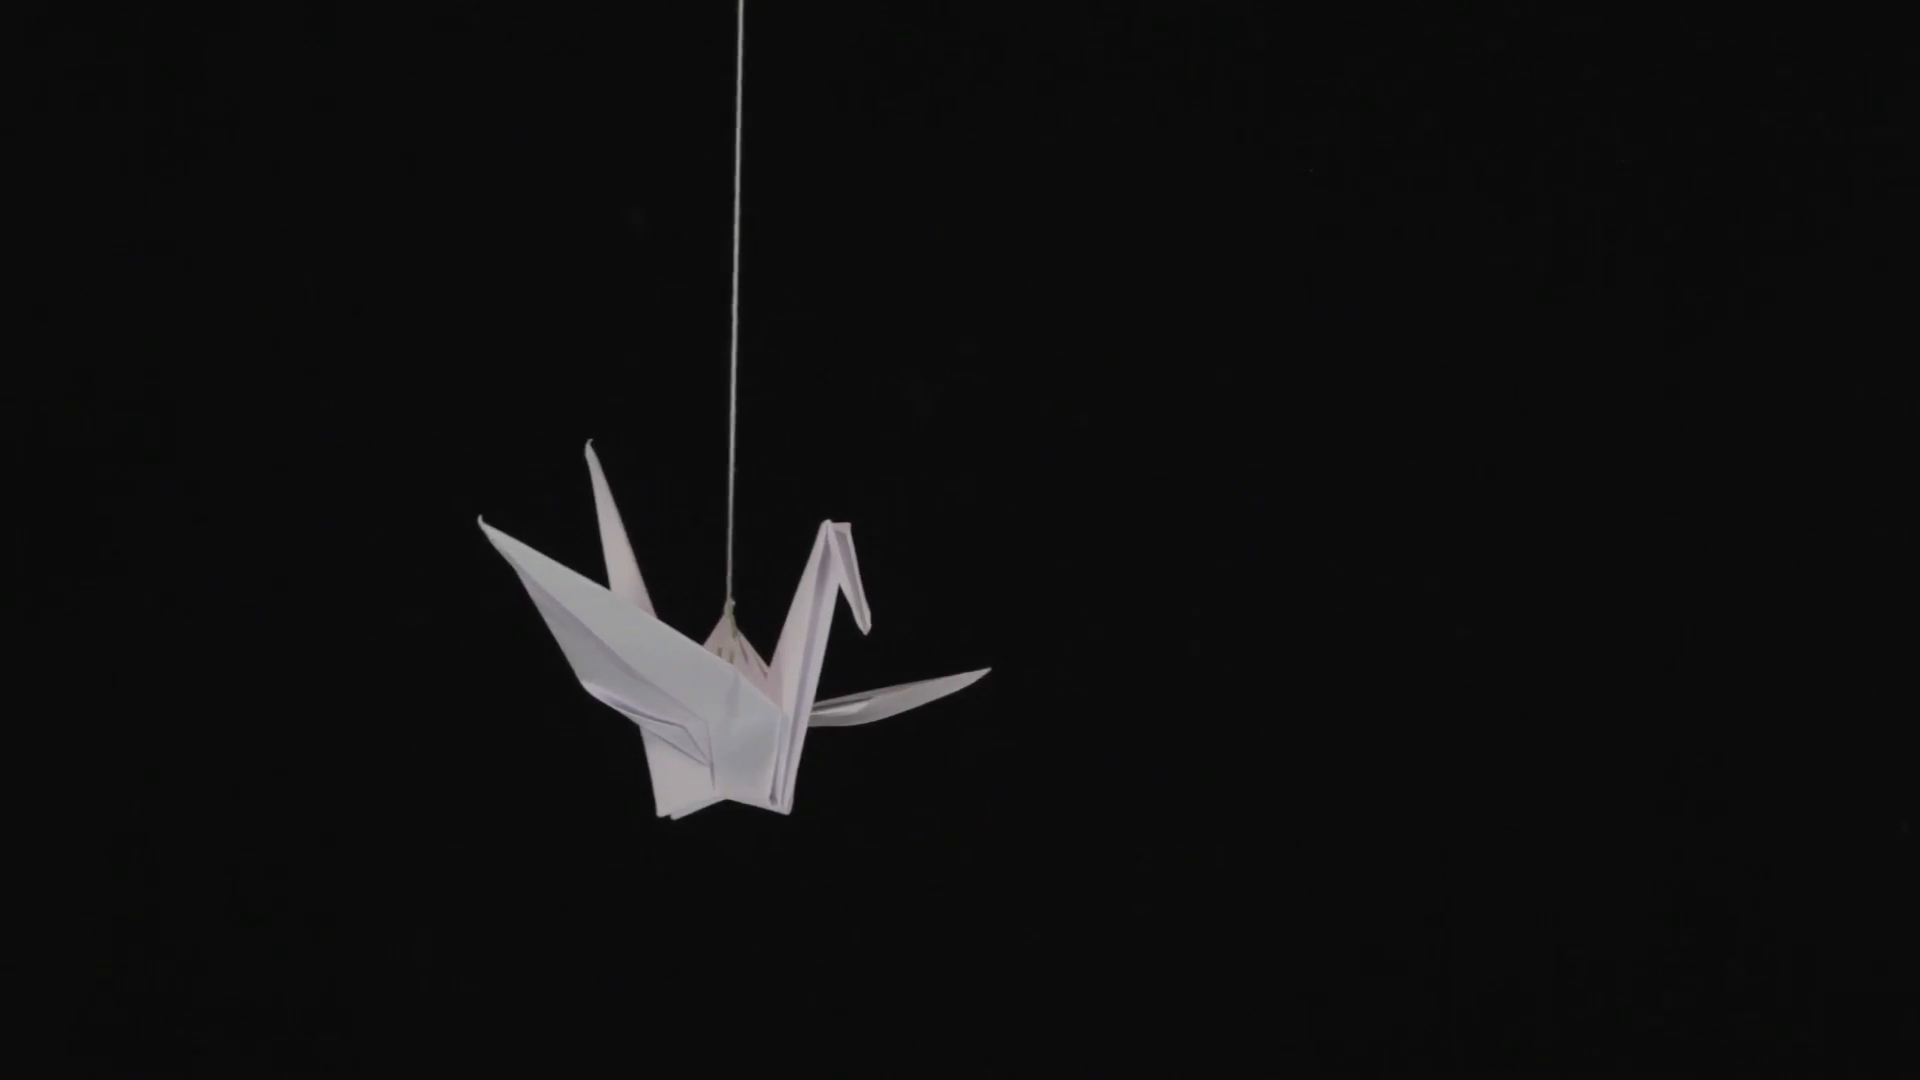 Crane Origami Video White Paper Origami Crane Swinging On Thread Against Black Background Stock Video Footage Storyblocks Video